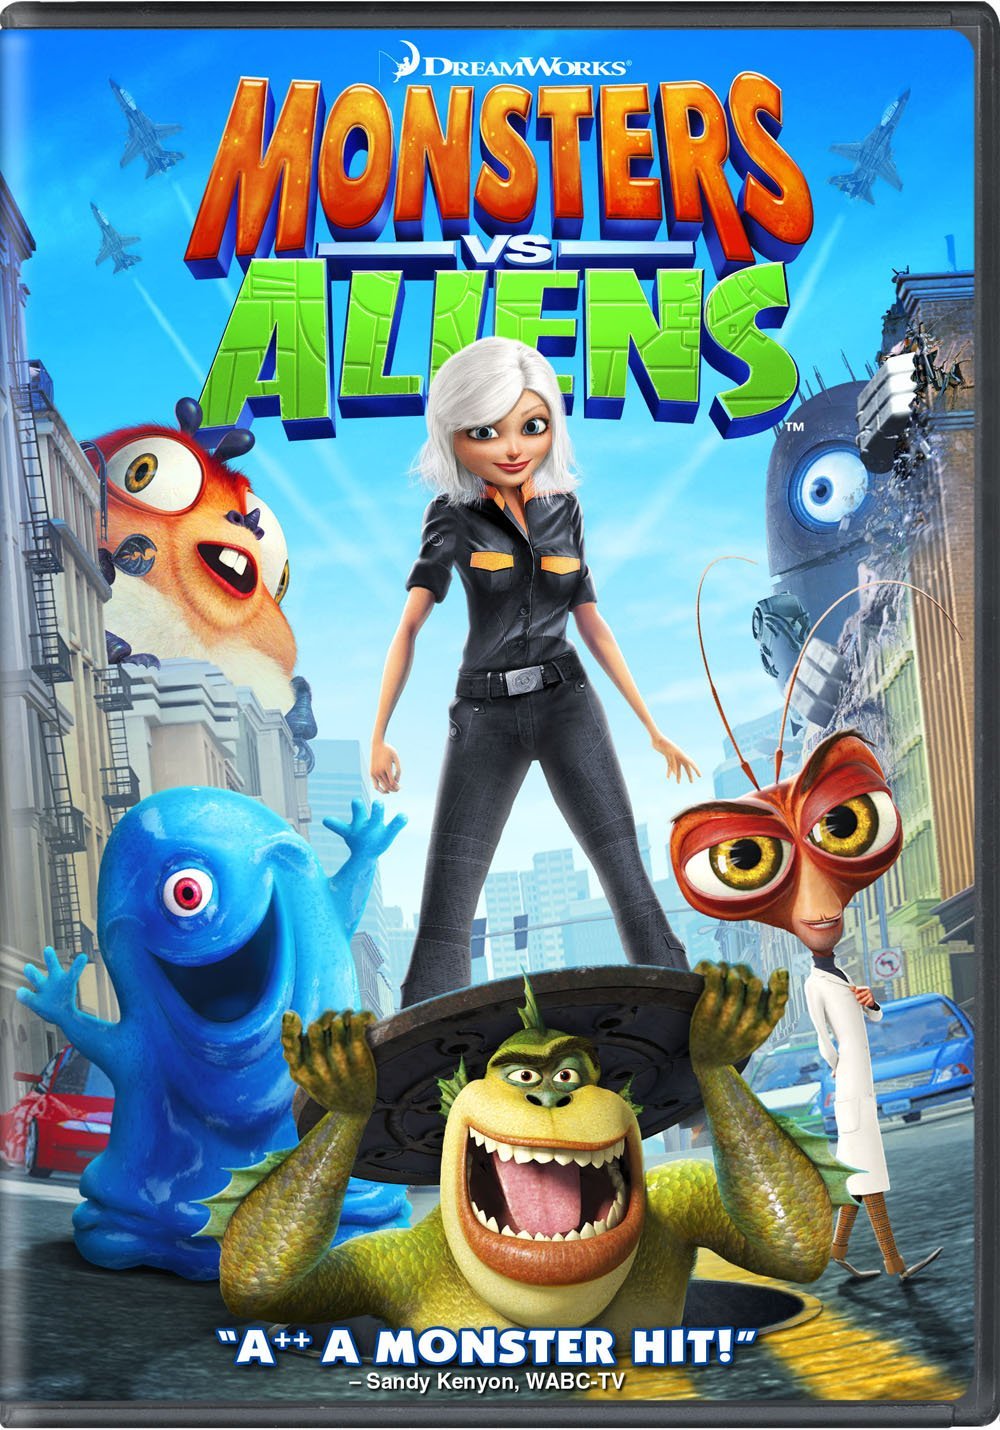 Monsters vs. Aliens Home Video | Dreamworks Animation Wiki | Fandom